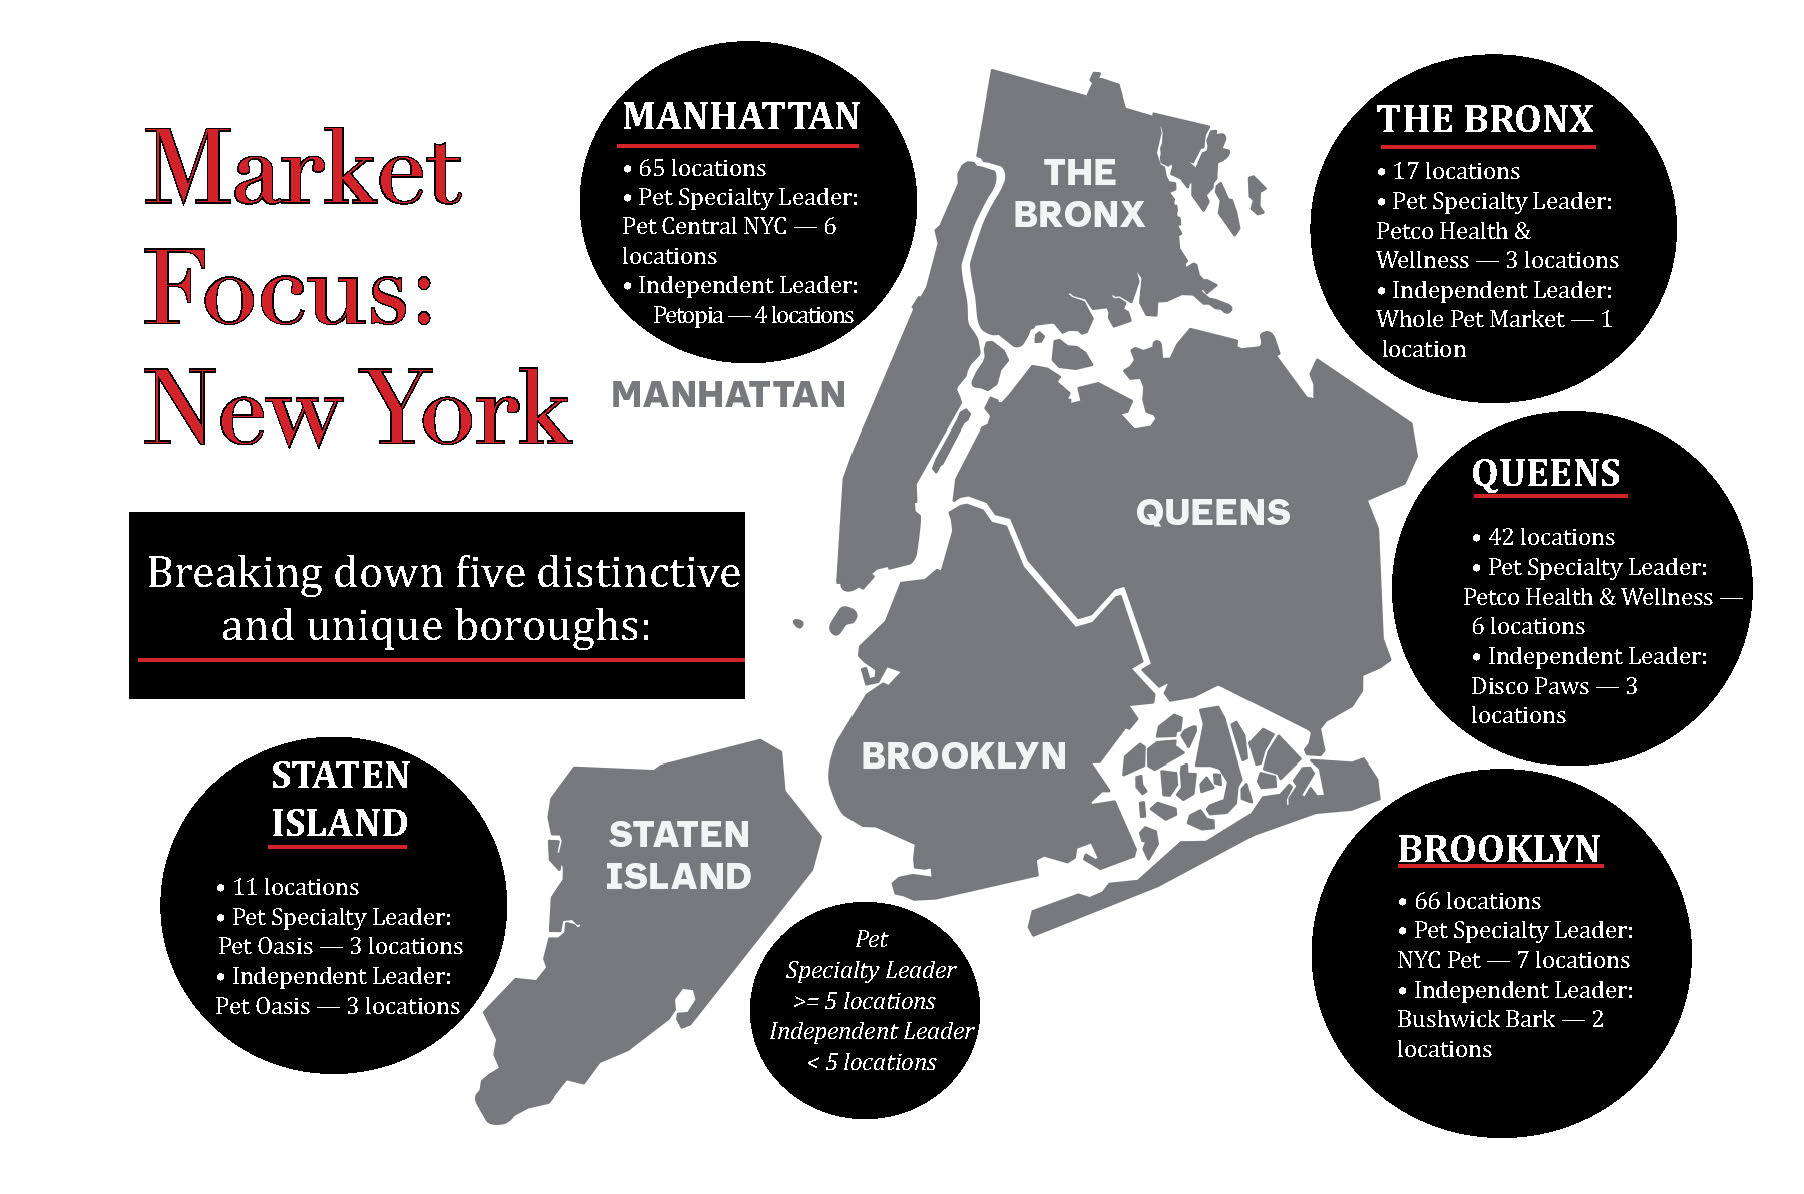 Market Focus: New York